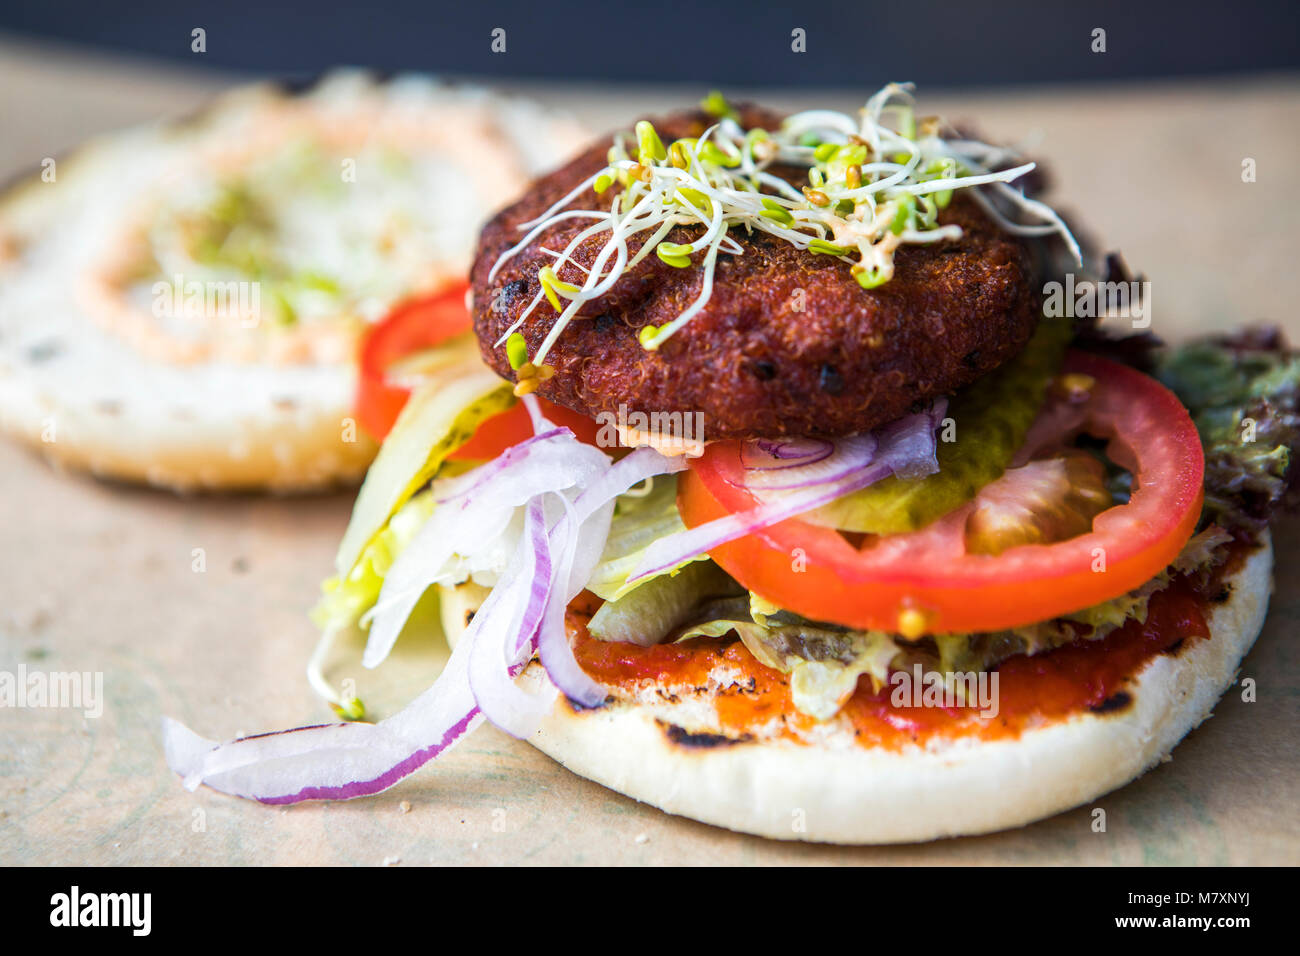 Burger de quinoa vegan aliments de rue, avec la tomate et la germination des herbes. Banque D'Images